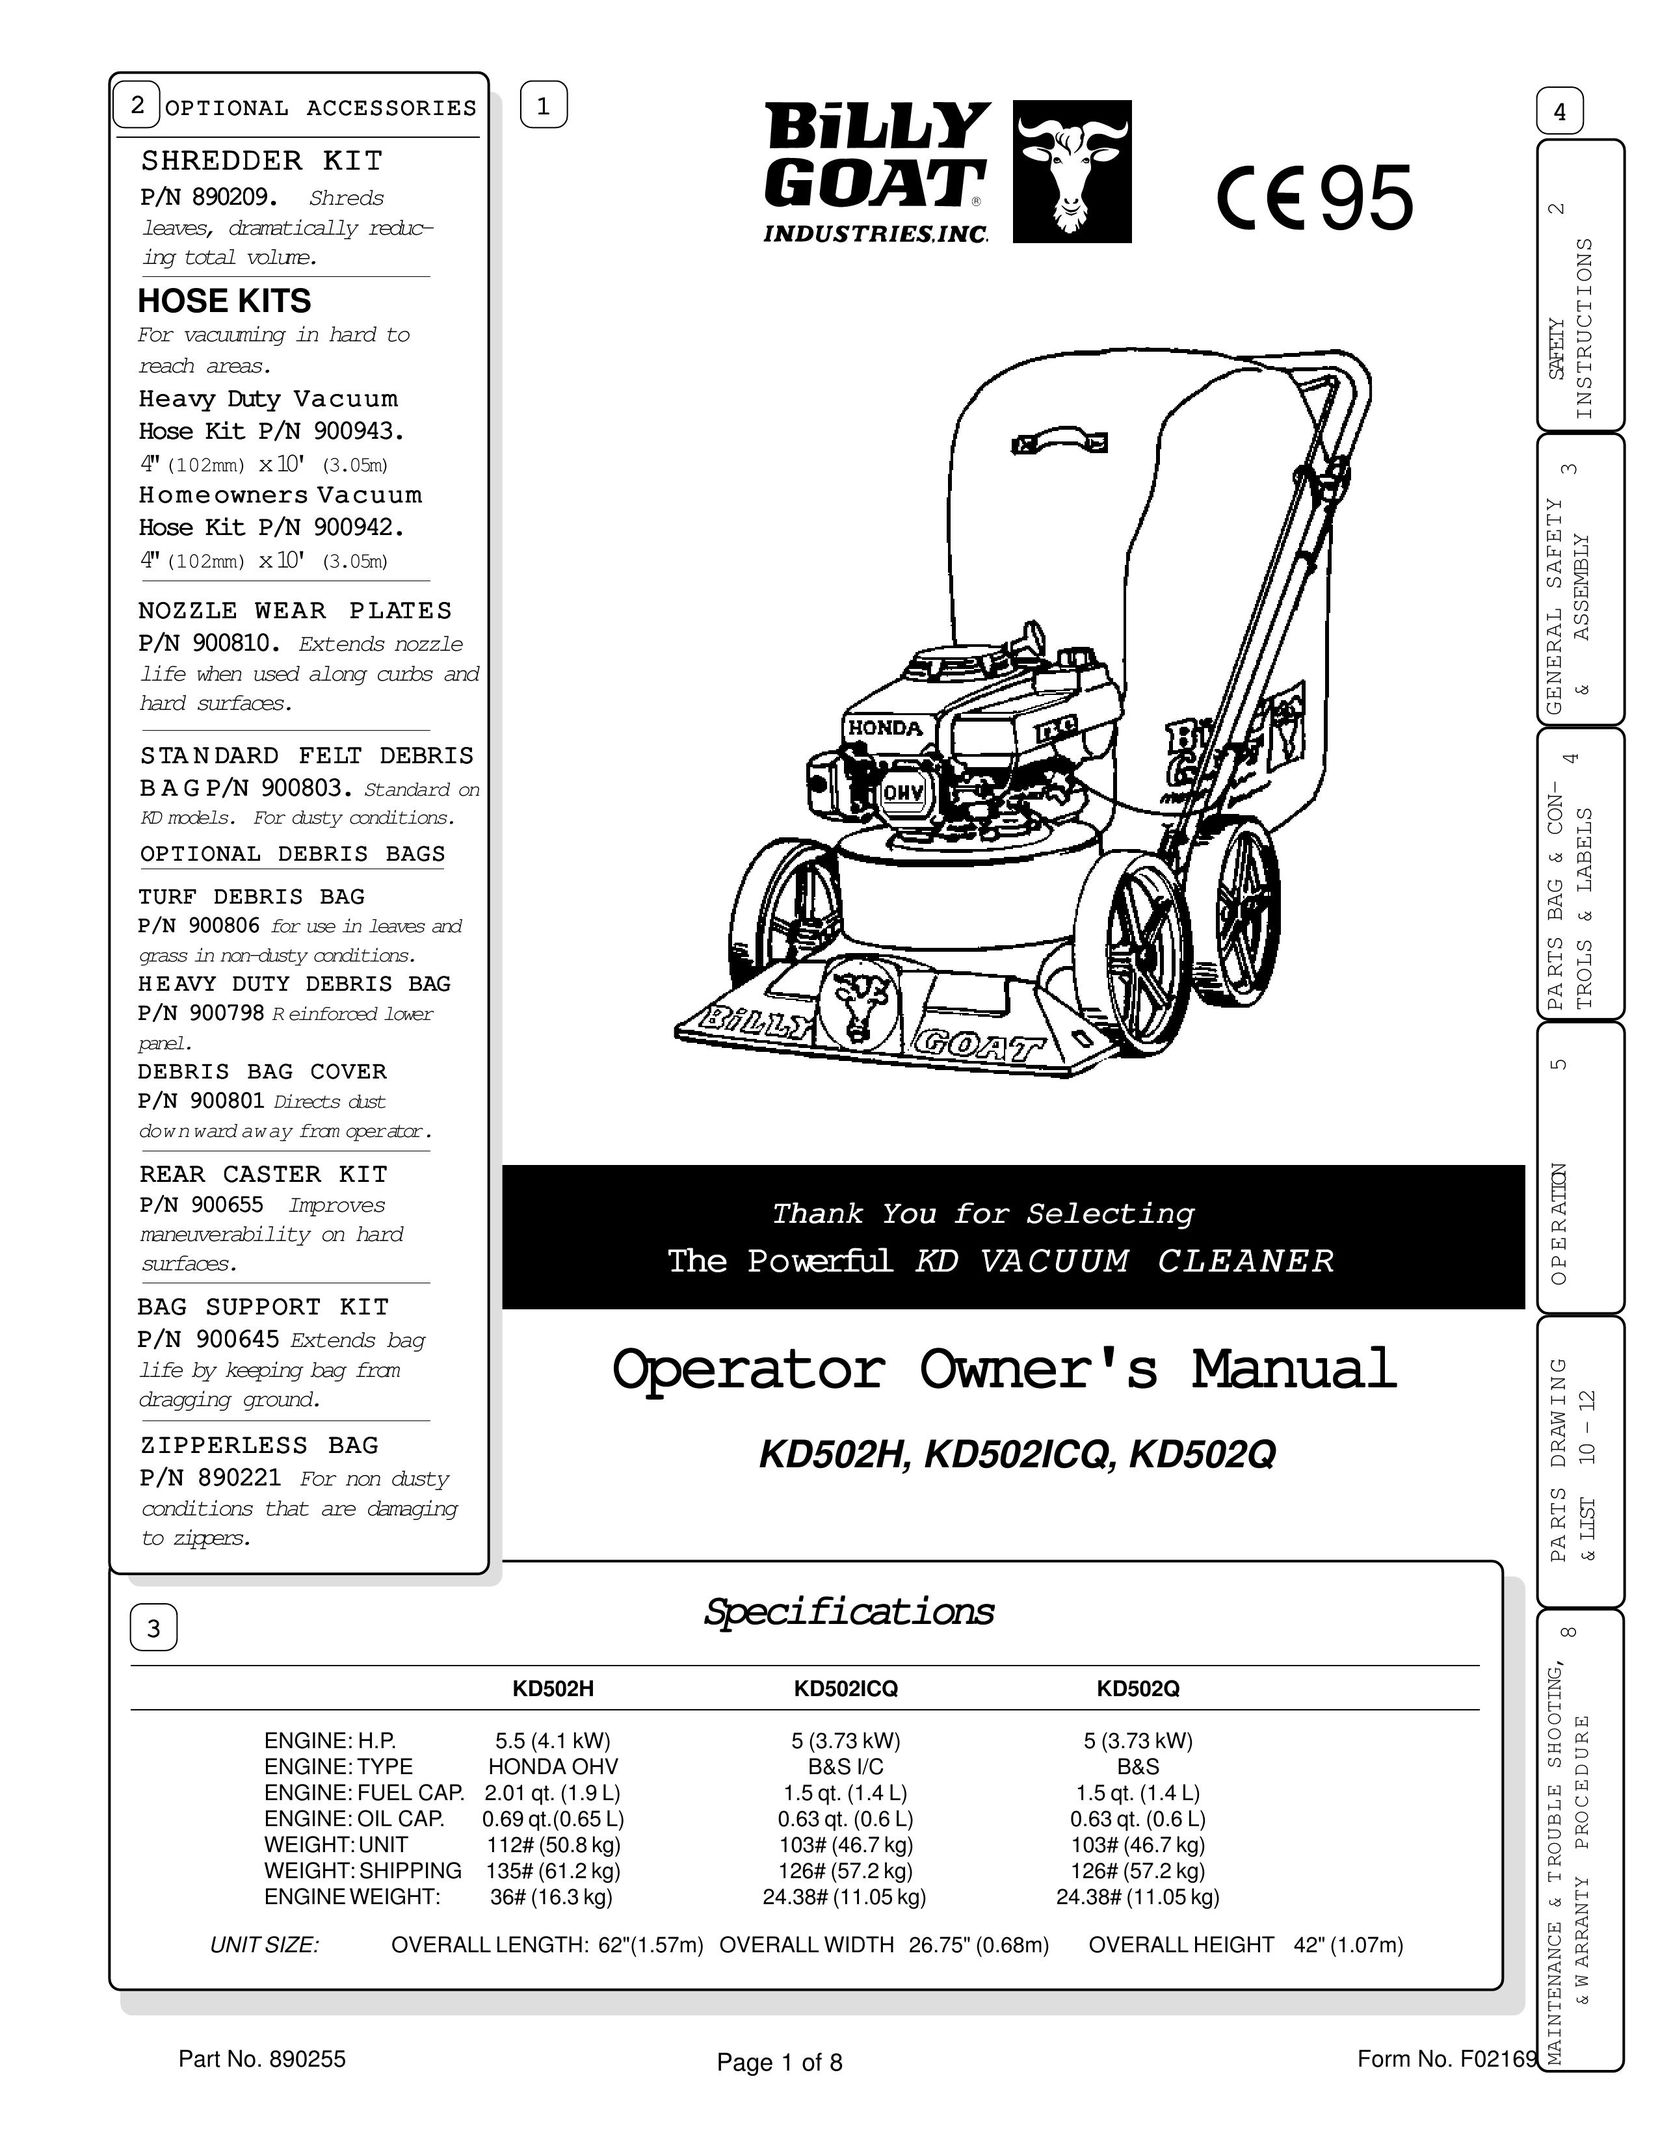 Billy Goat KD502H Vacuum Cleaner User Manual